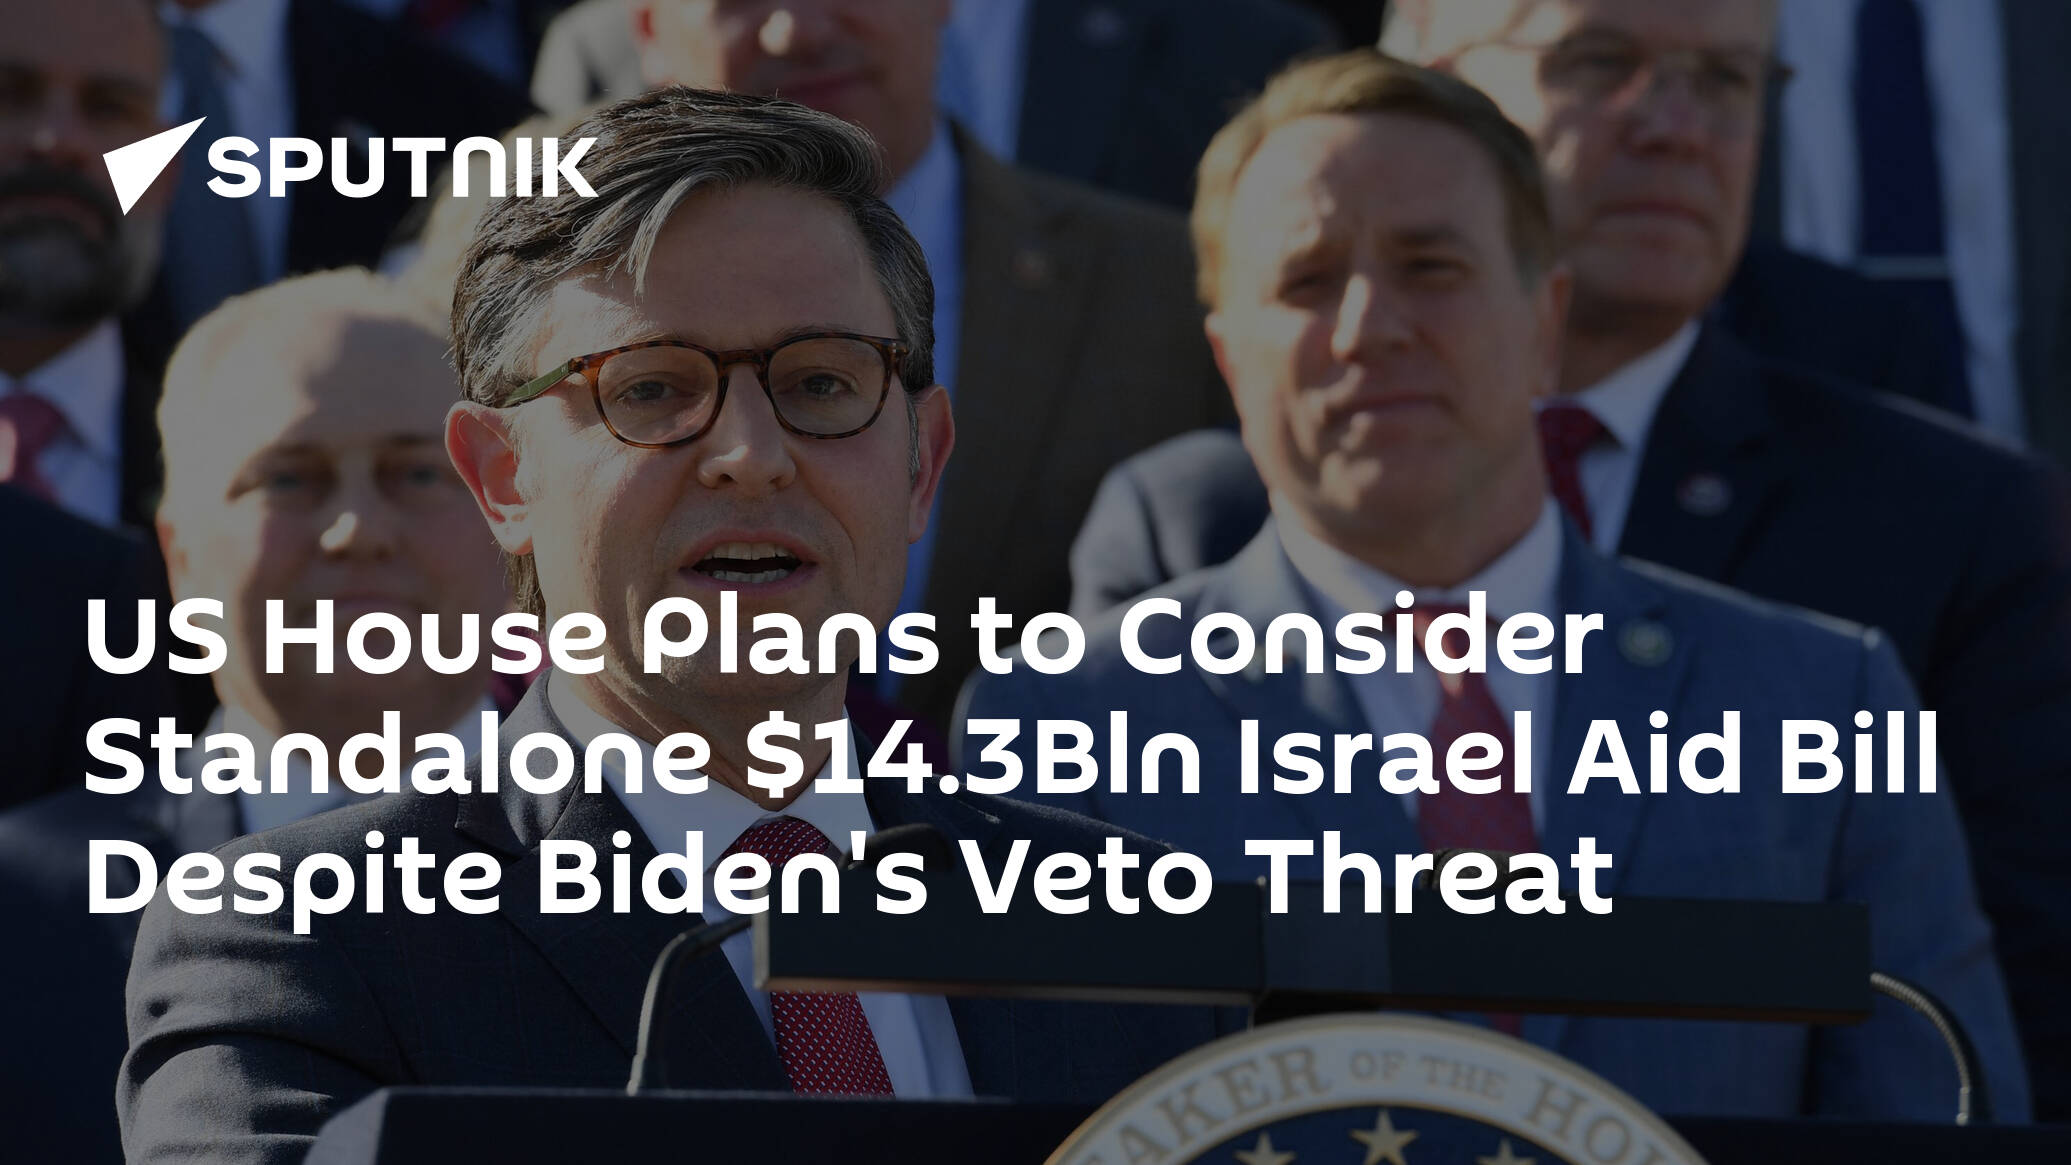 US House Plans to Consider Standalone .3Bln Israel Aid Bill Despite Biden's Veto Threat